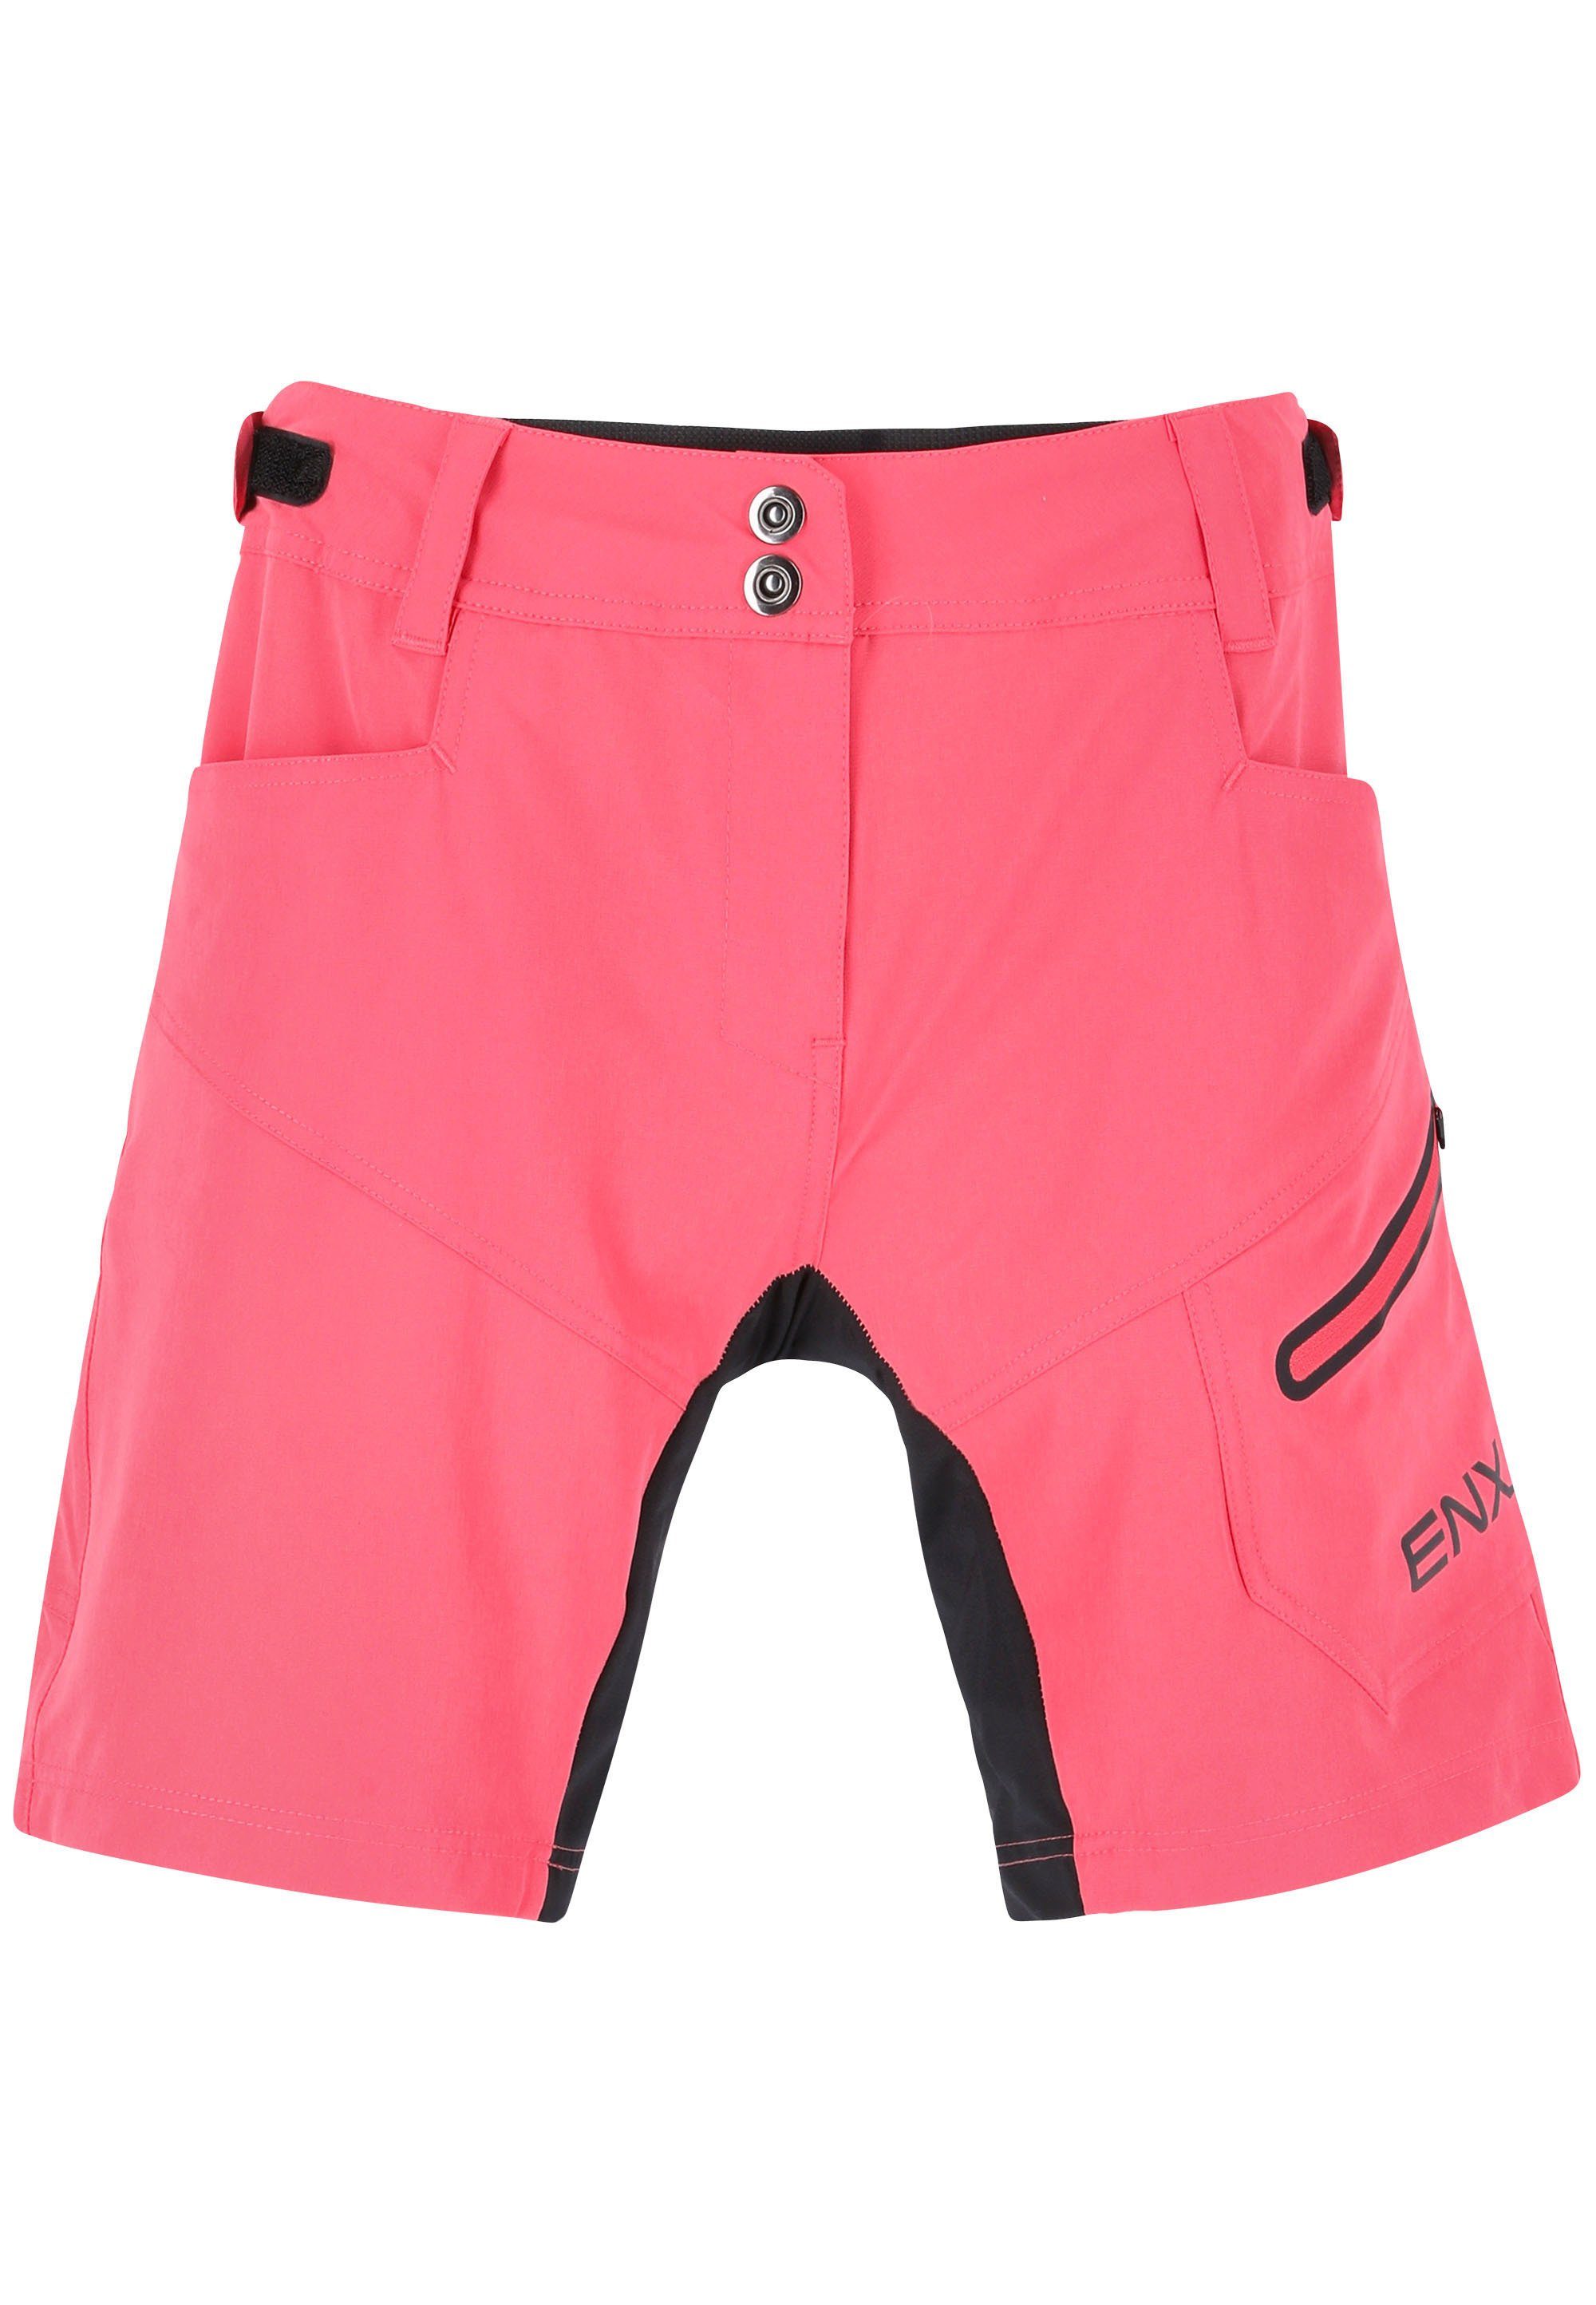 Jamilla Shorts ENDURANCE Radhose 1 W herausnehmbarer Innen-Tights in 2 mit rosa